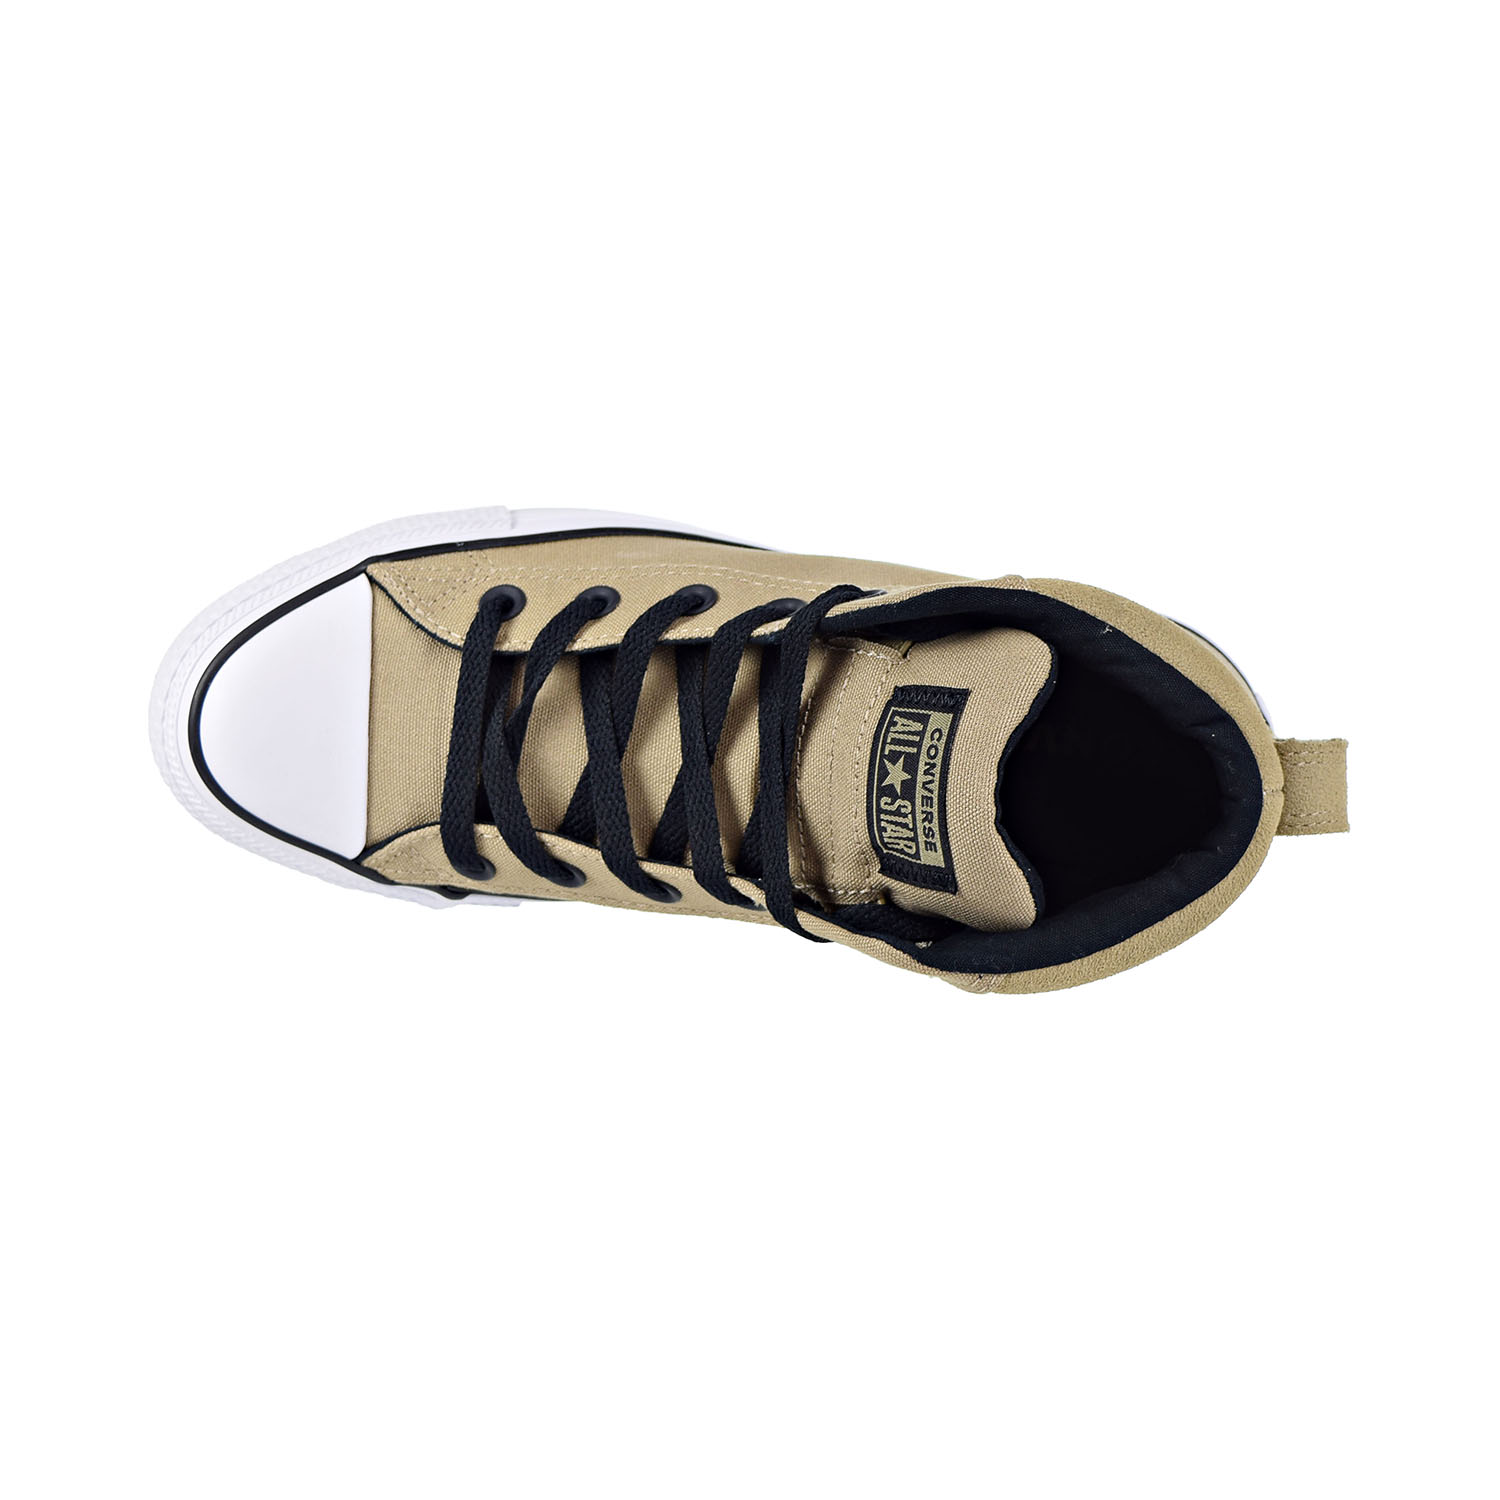 Converse Chuck Taylor All Star Street Mid Unisex Shoes Khaki/Black/White 163401c - image 5 of 6